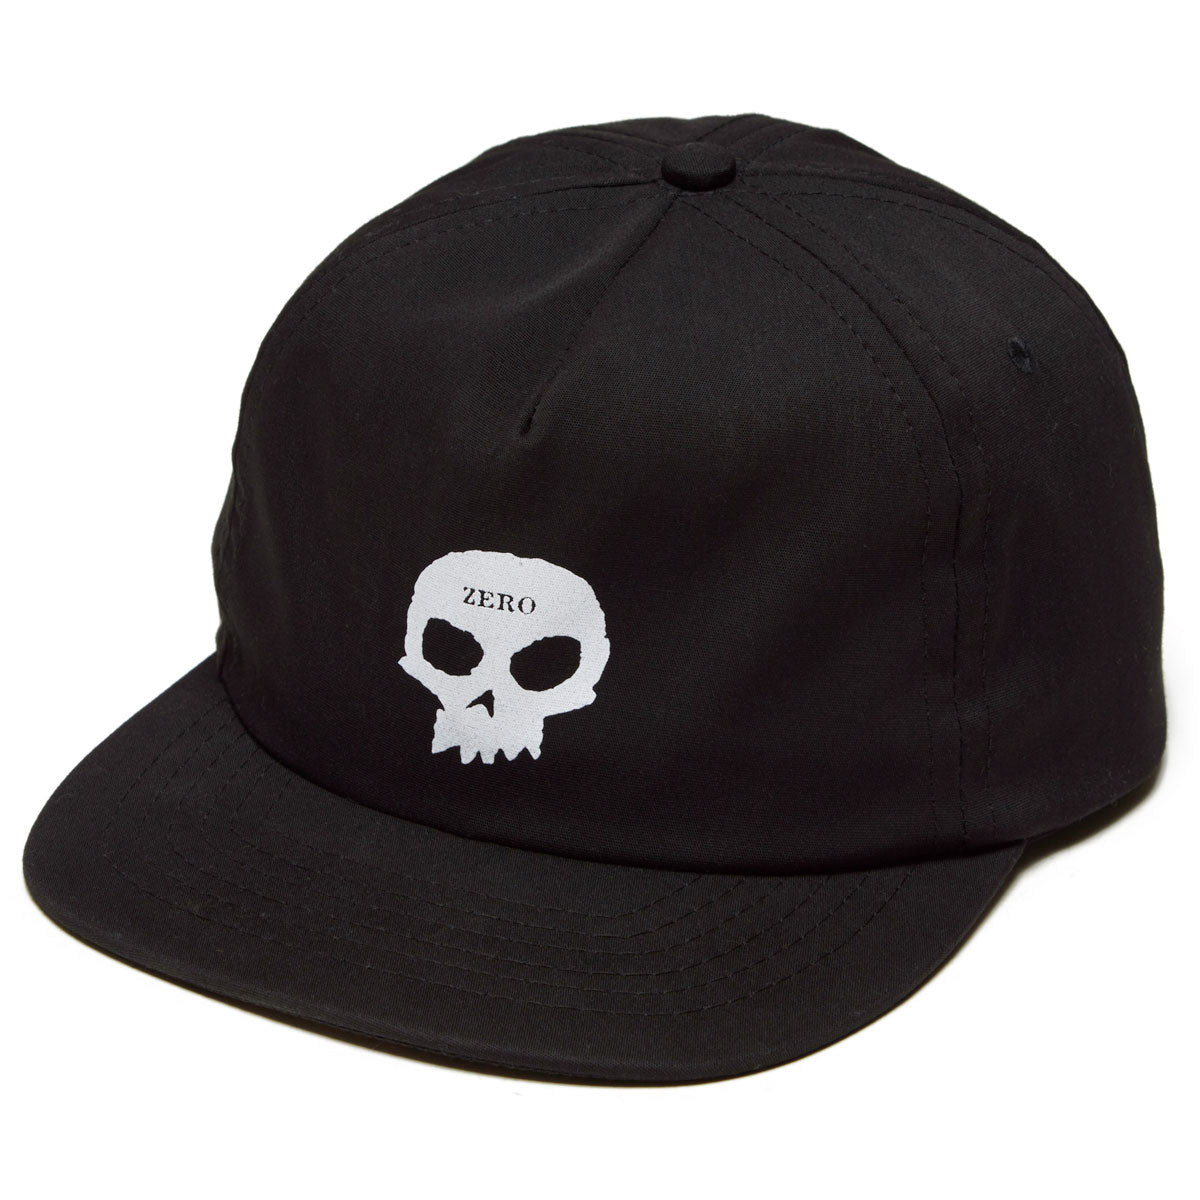 Zero Single Skull Hat - Black image 1